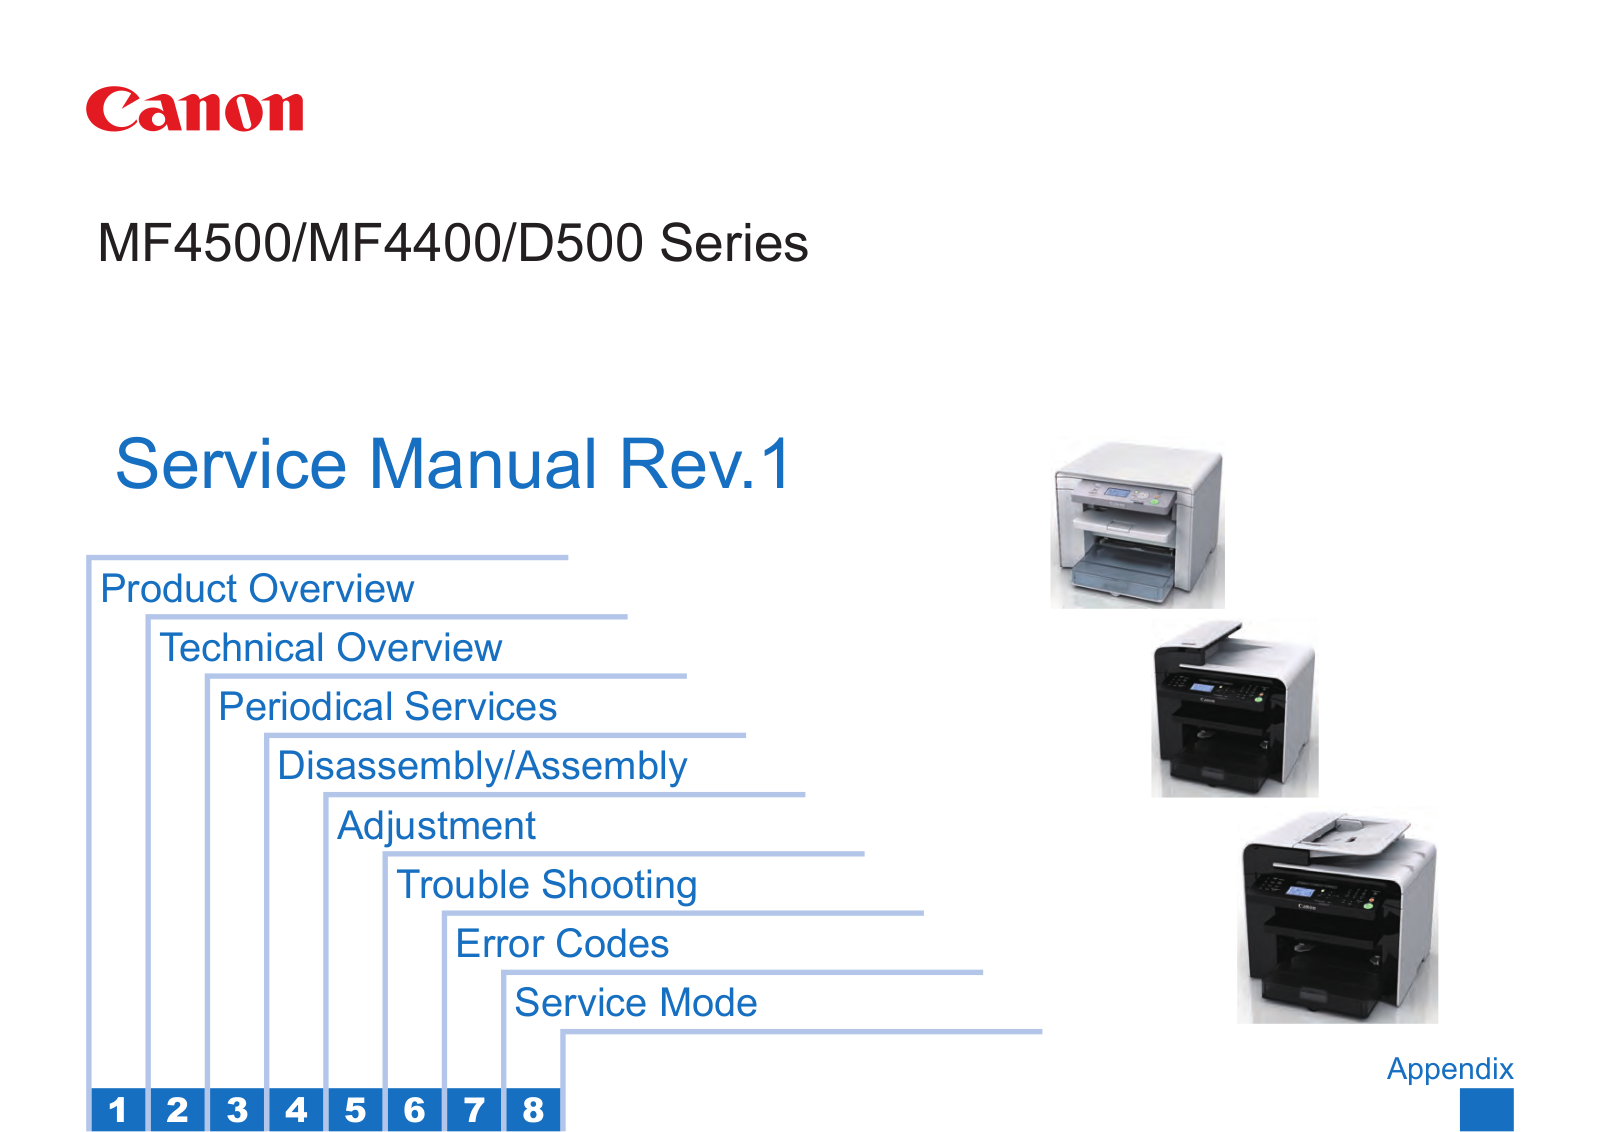 Canon MF4500, MF4400, D500 Service Manual